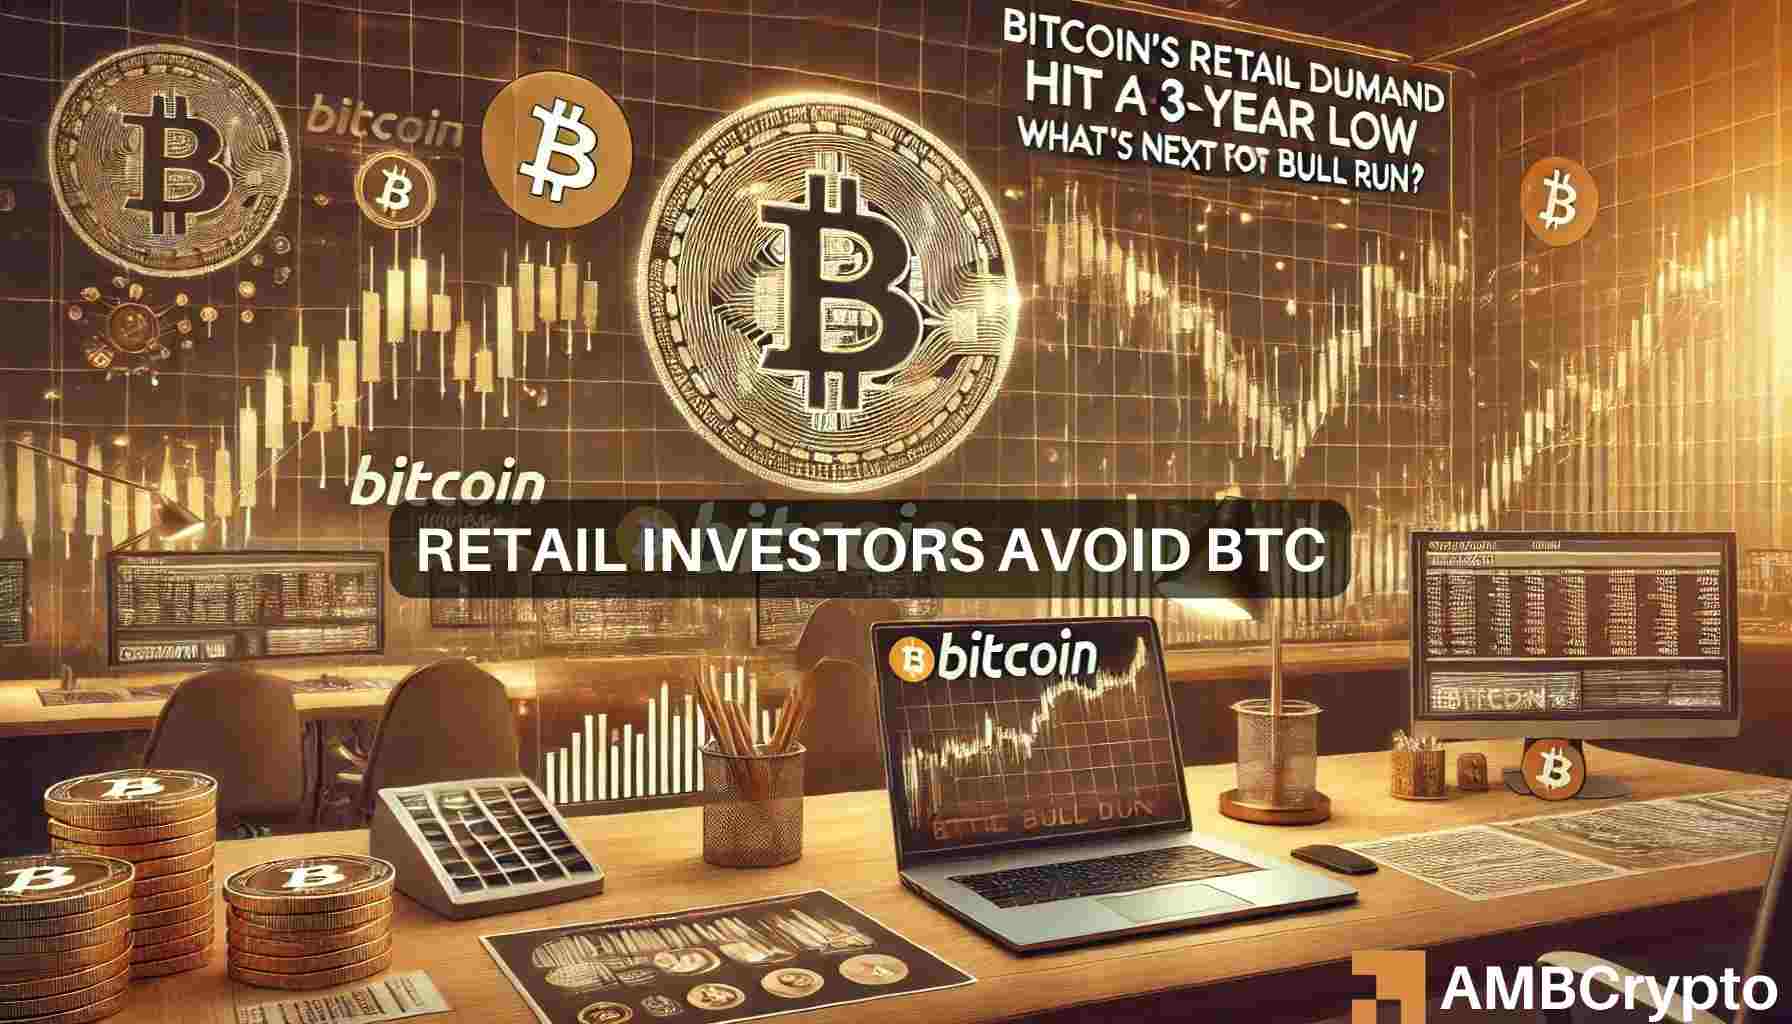 Bitcoin’s bull run continues, but where's the retail demand?